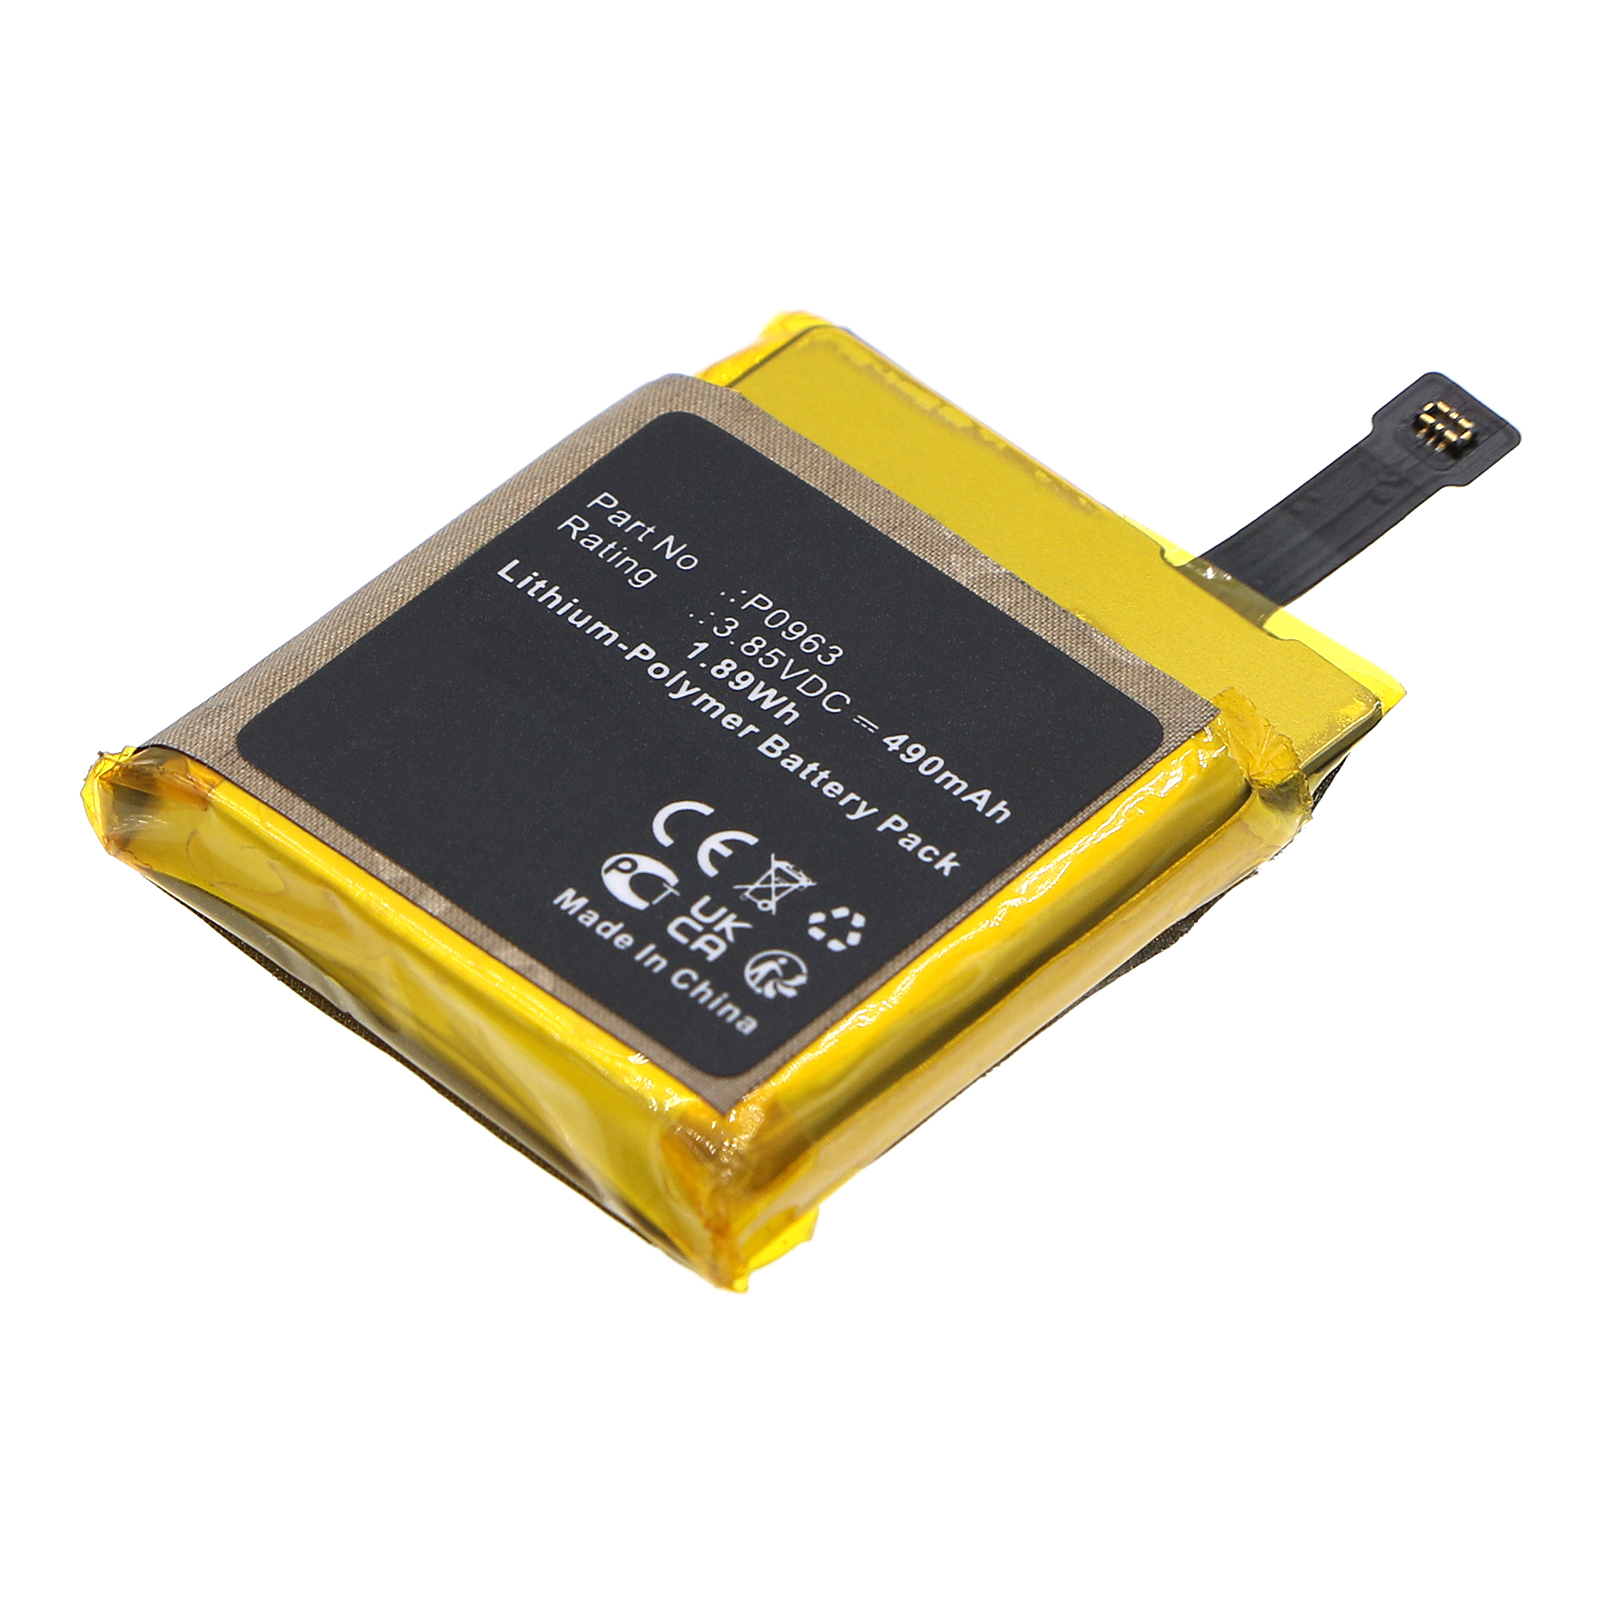 Synergy Digital Smartwatch Battery, Compatible with T-Mobile P0963 Smartwatch Battery (Li-Pol, 3.85V, 490mAh)